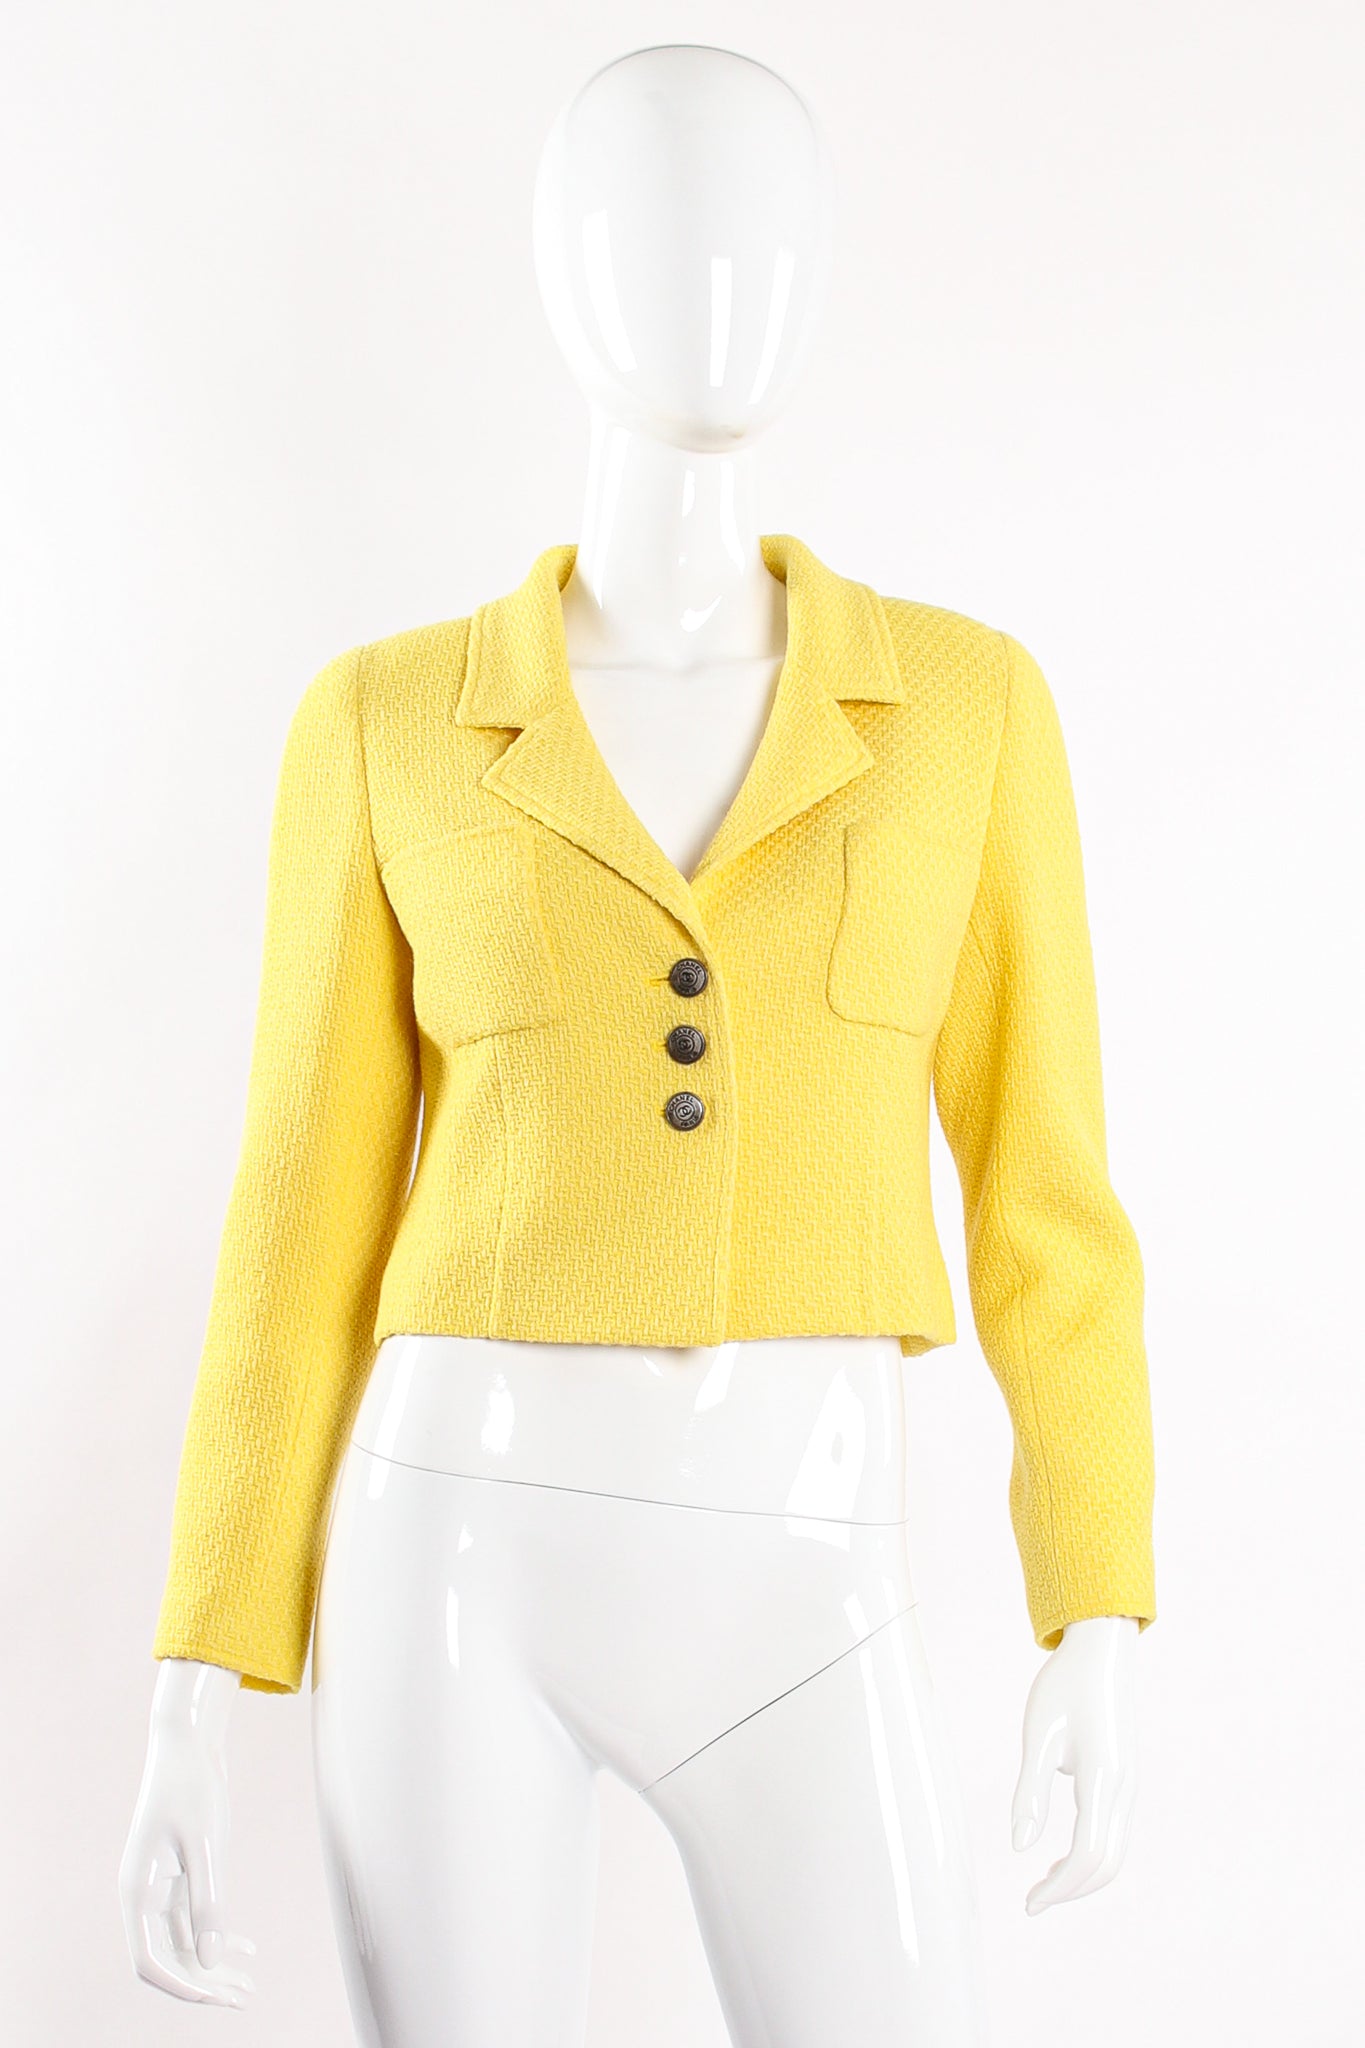 Vintage Chanel Yellow Basketweave Tweed Shrunken Jacket on Mannequin front at Recess Los Angeles